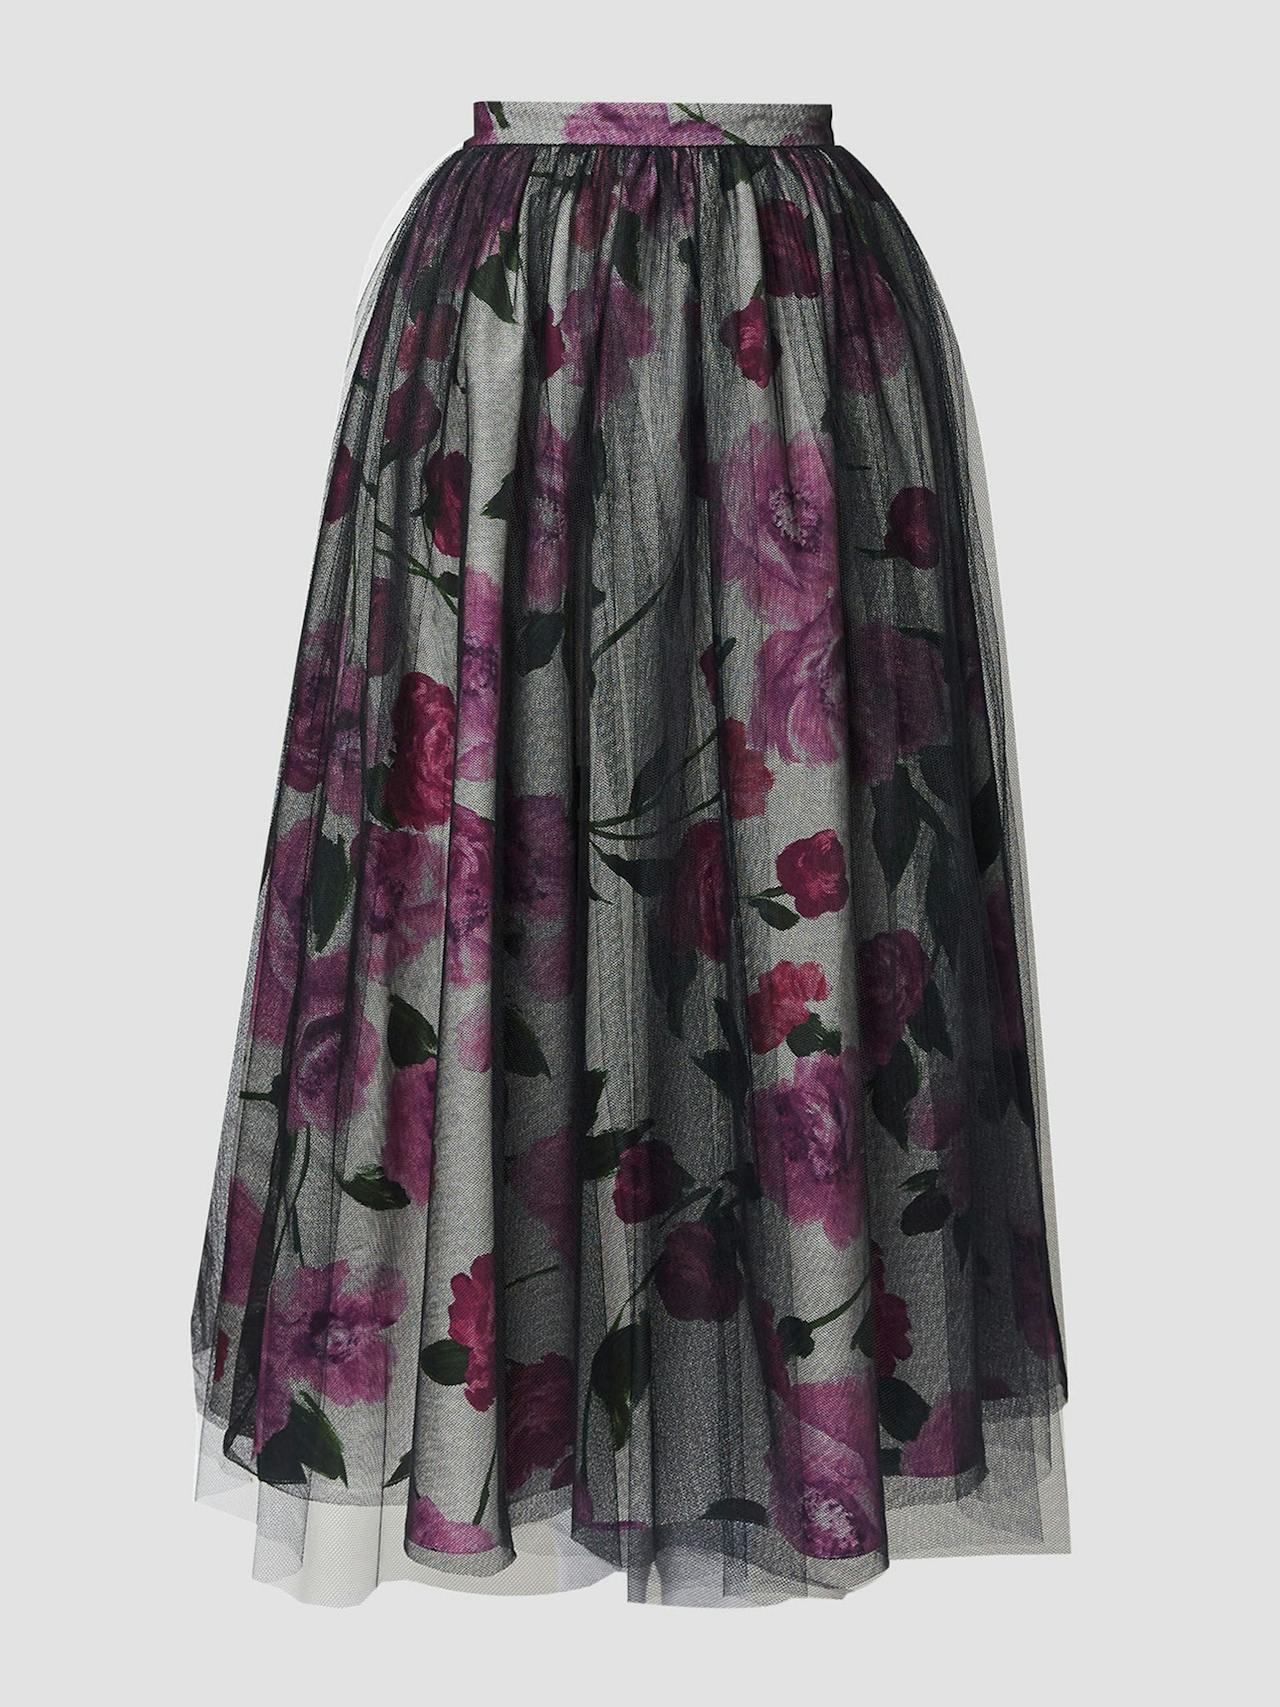 Midi skirt with tulle overlay